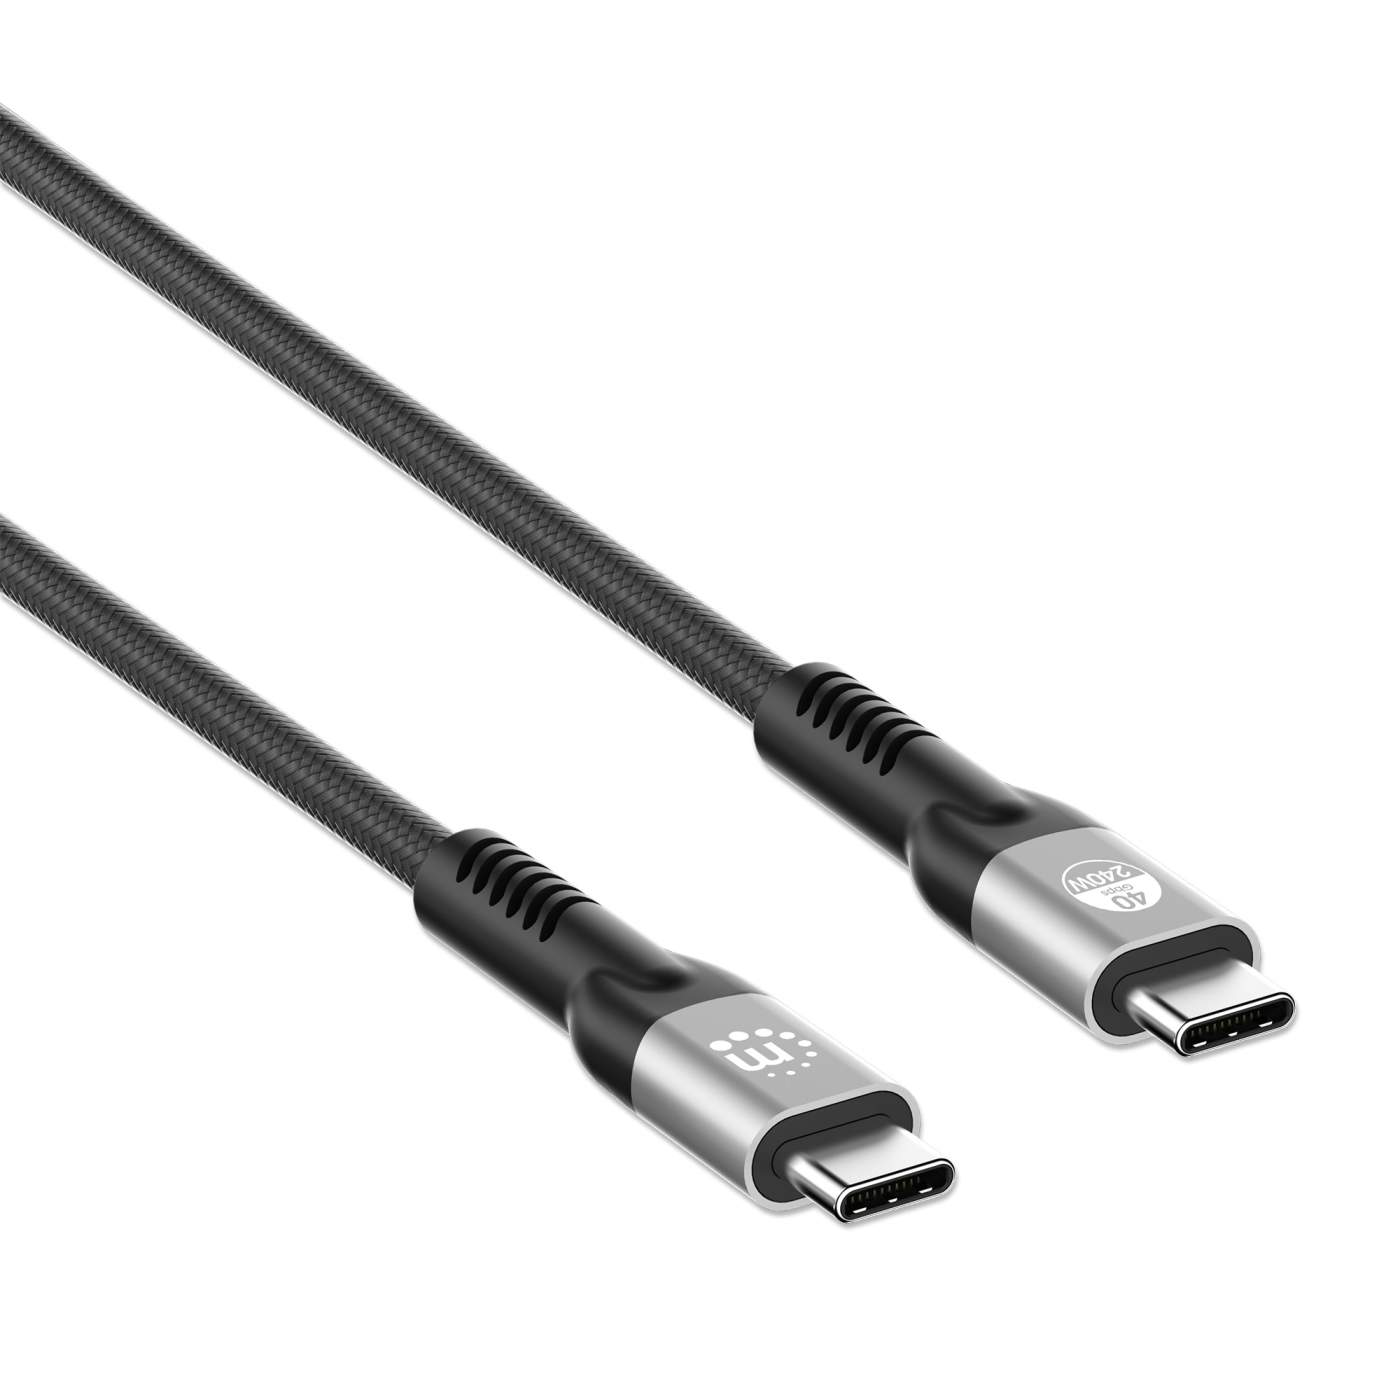 Cable Usb C Corto, Cable Thunderbolt 4 / Usb4 De 0.3 Pies, C